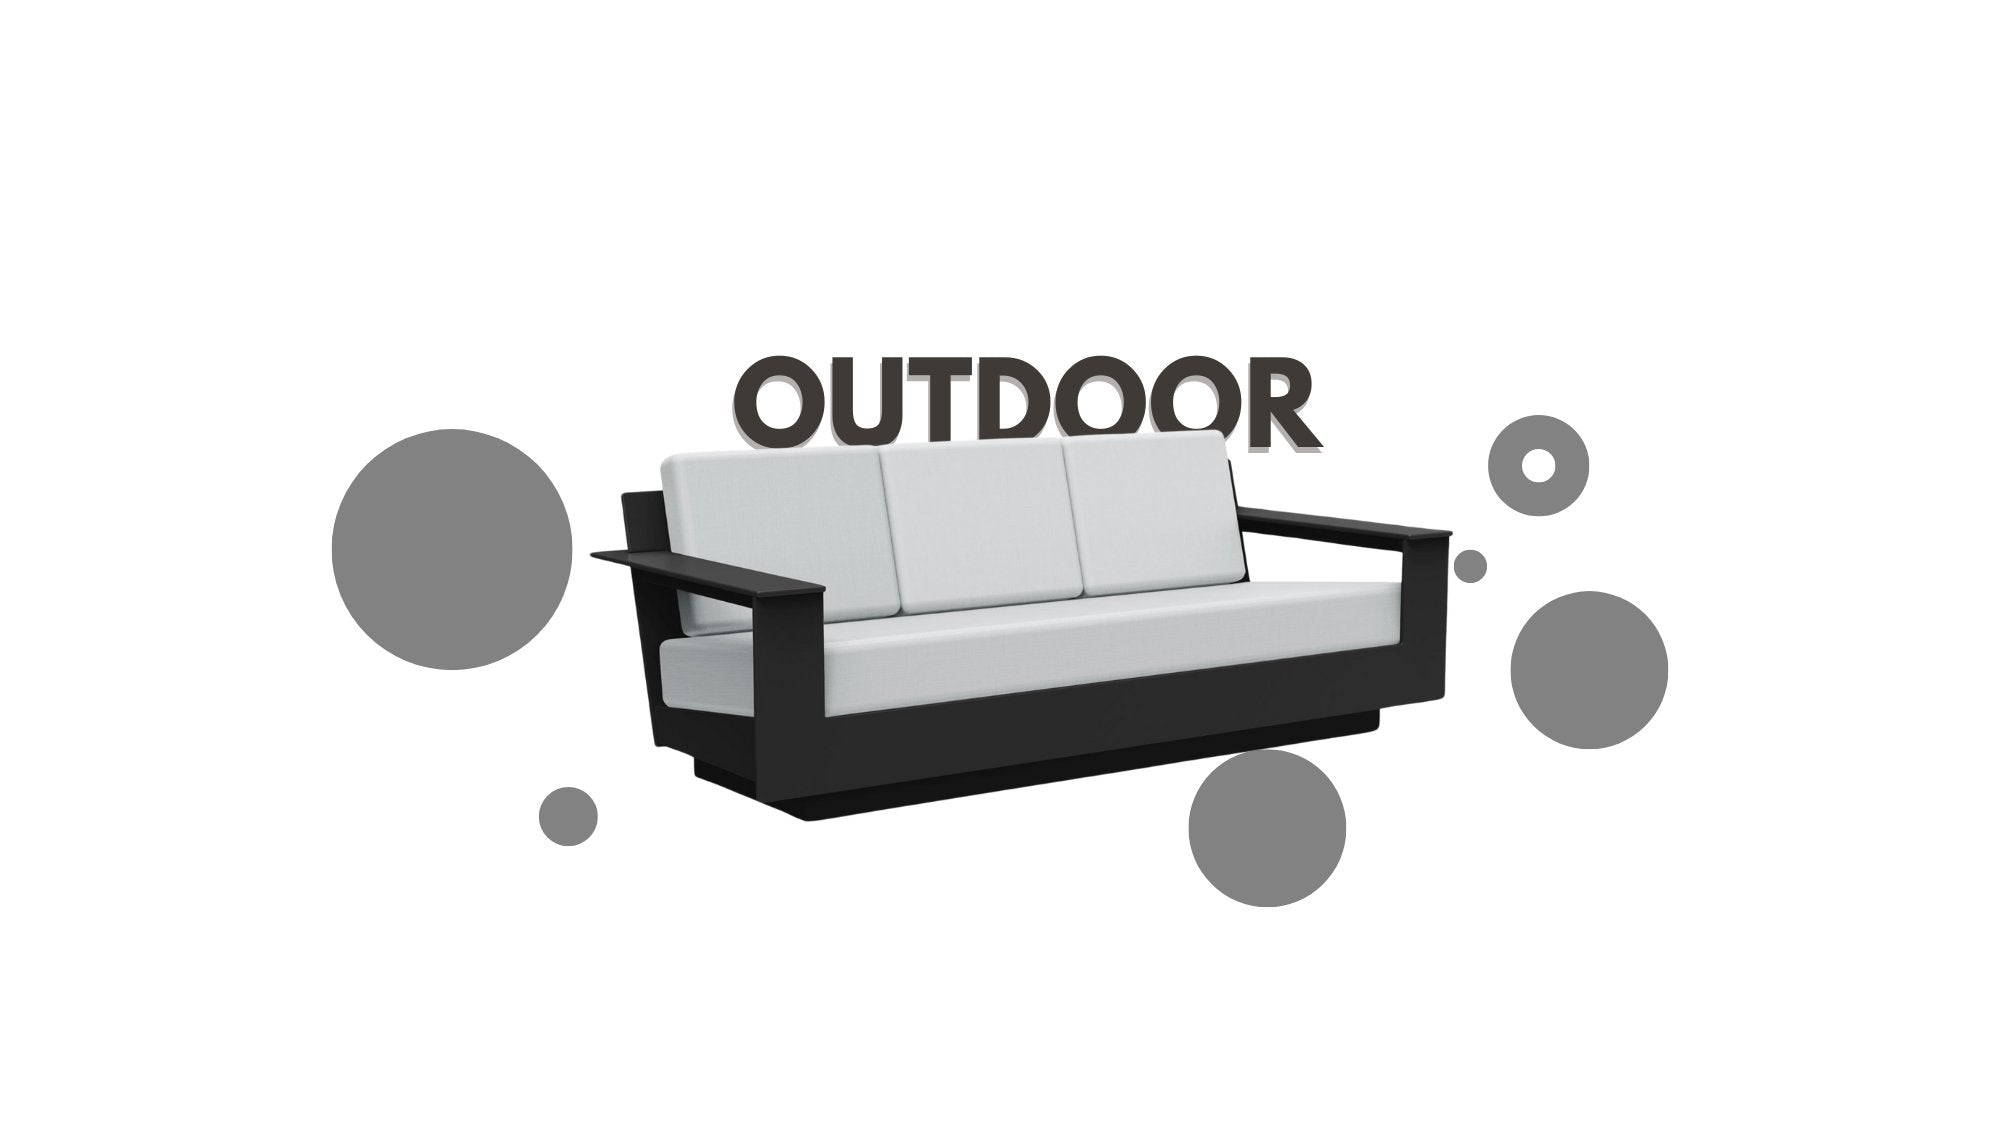 Outdoor Furniture StudioYDesign Victoria BC